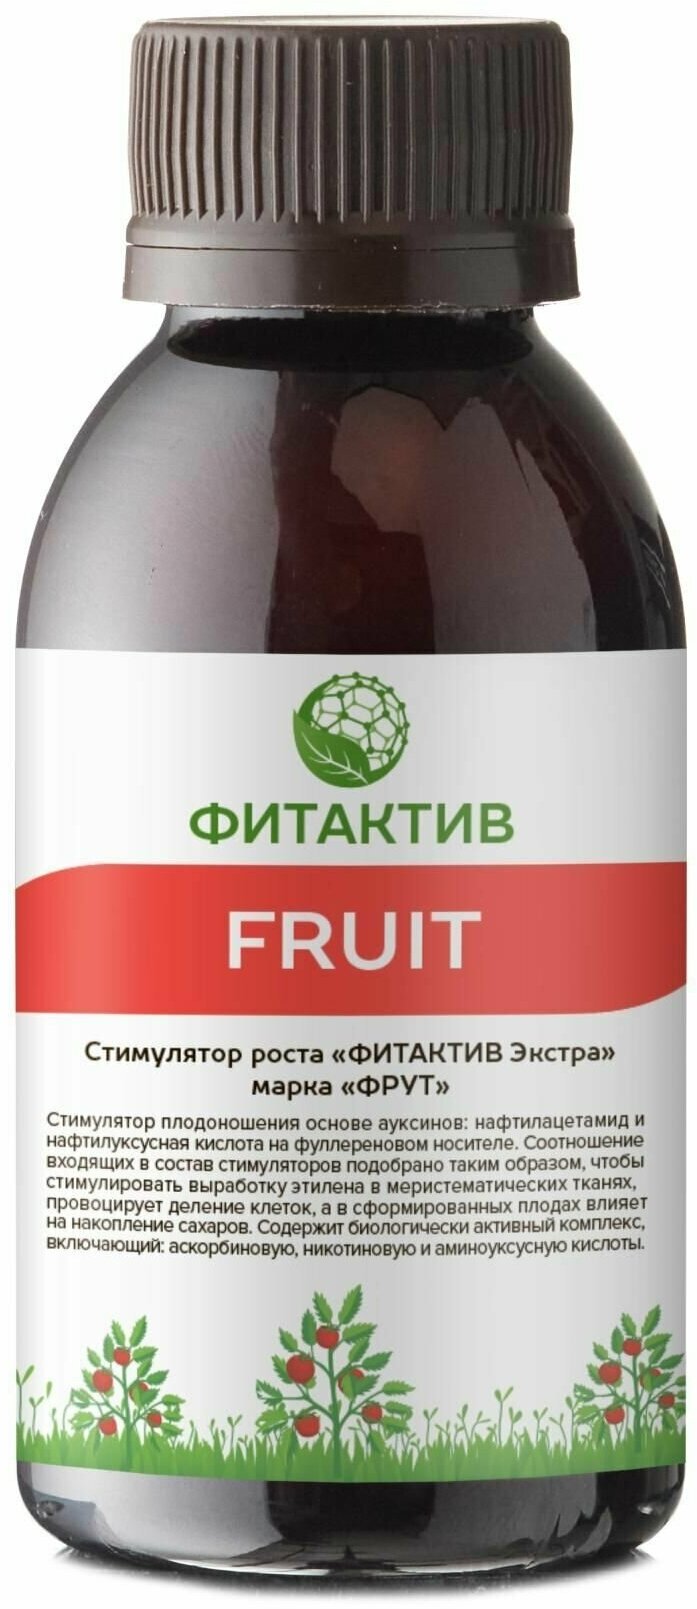 Удобрение для активного плодоношения и накопления сахаров Фитактив Фрут (Fitaktiv FRUIT) флакон 100 мл